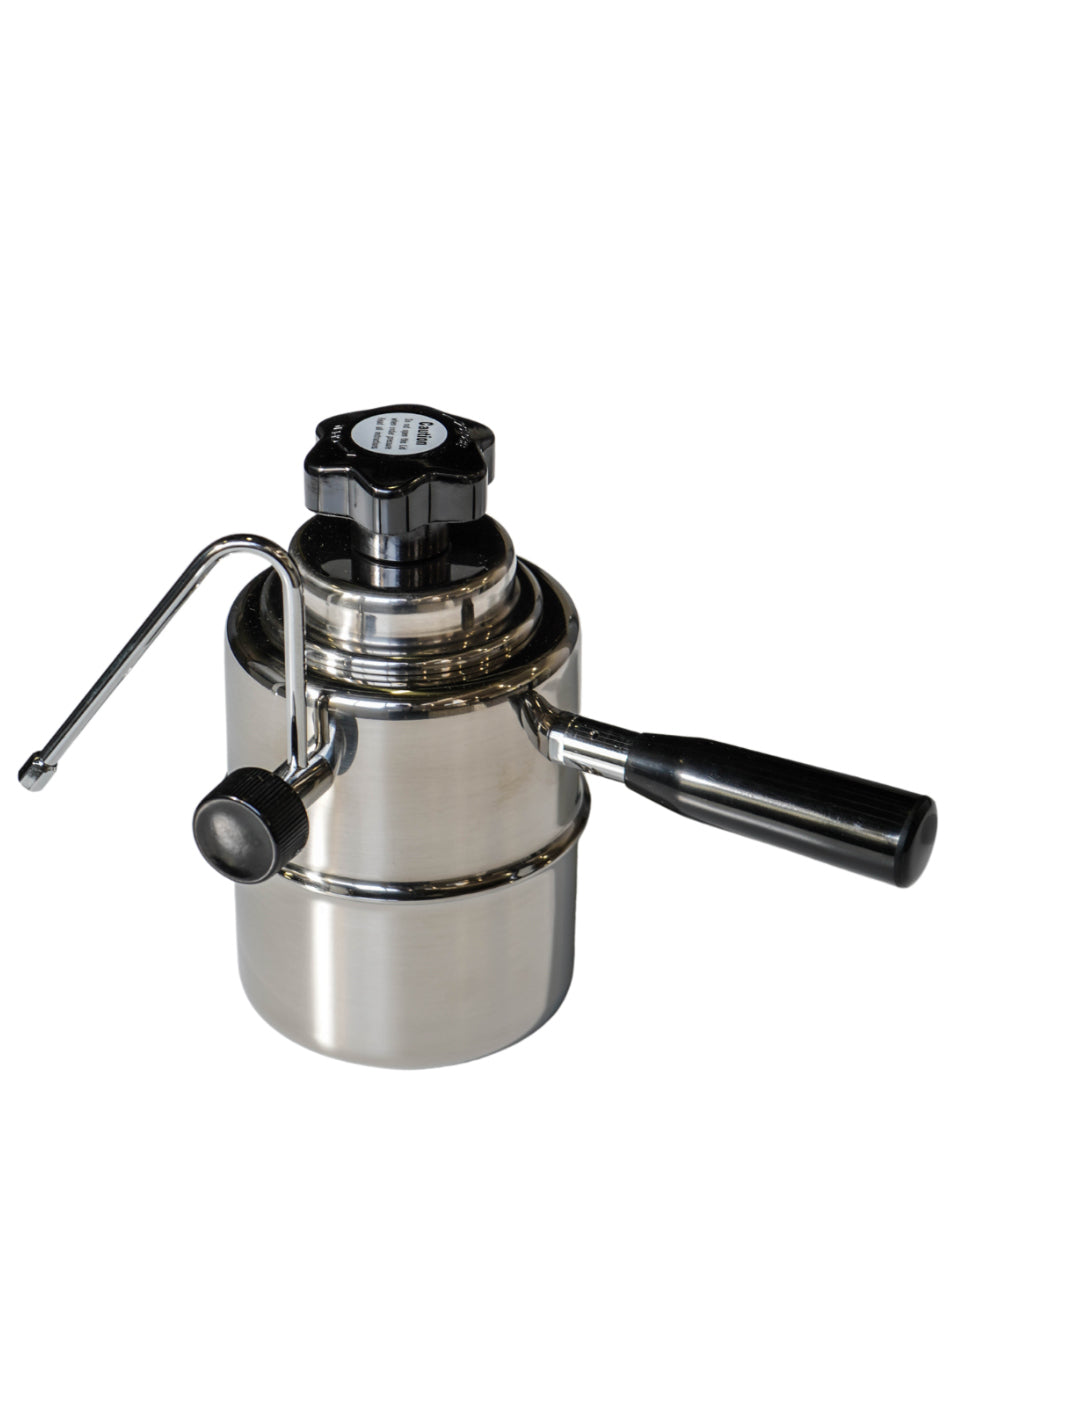 SOLD] Bellman Stovetop Steamer with Pressure Gauge - Buy/Sell